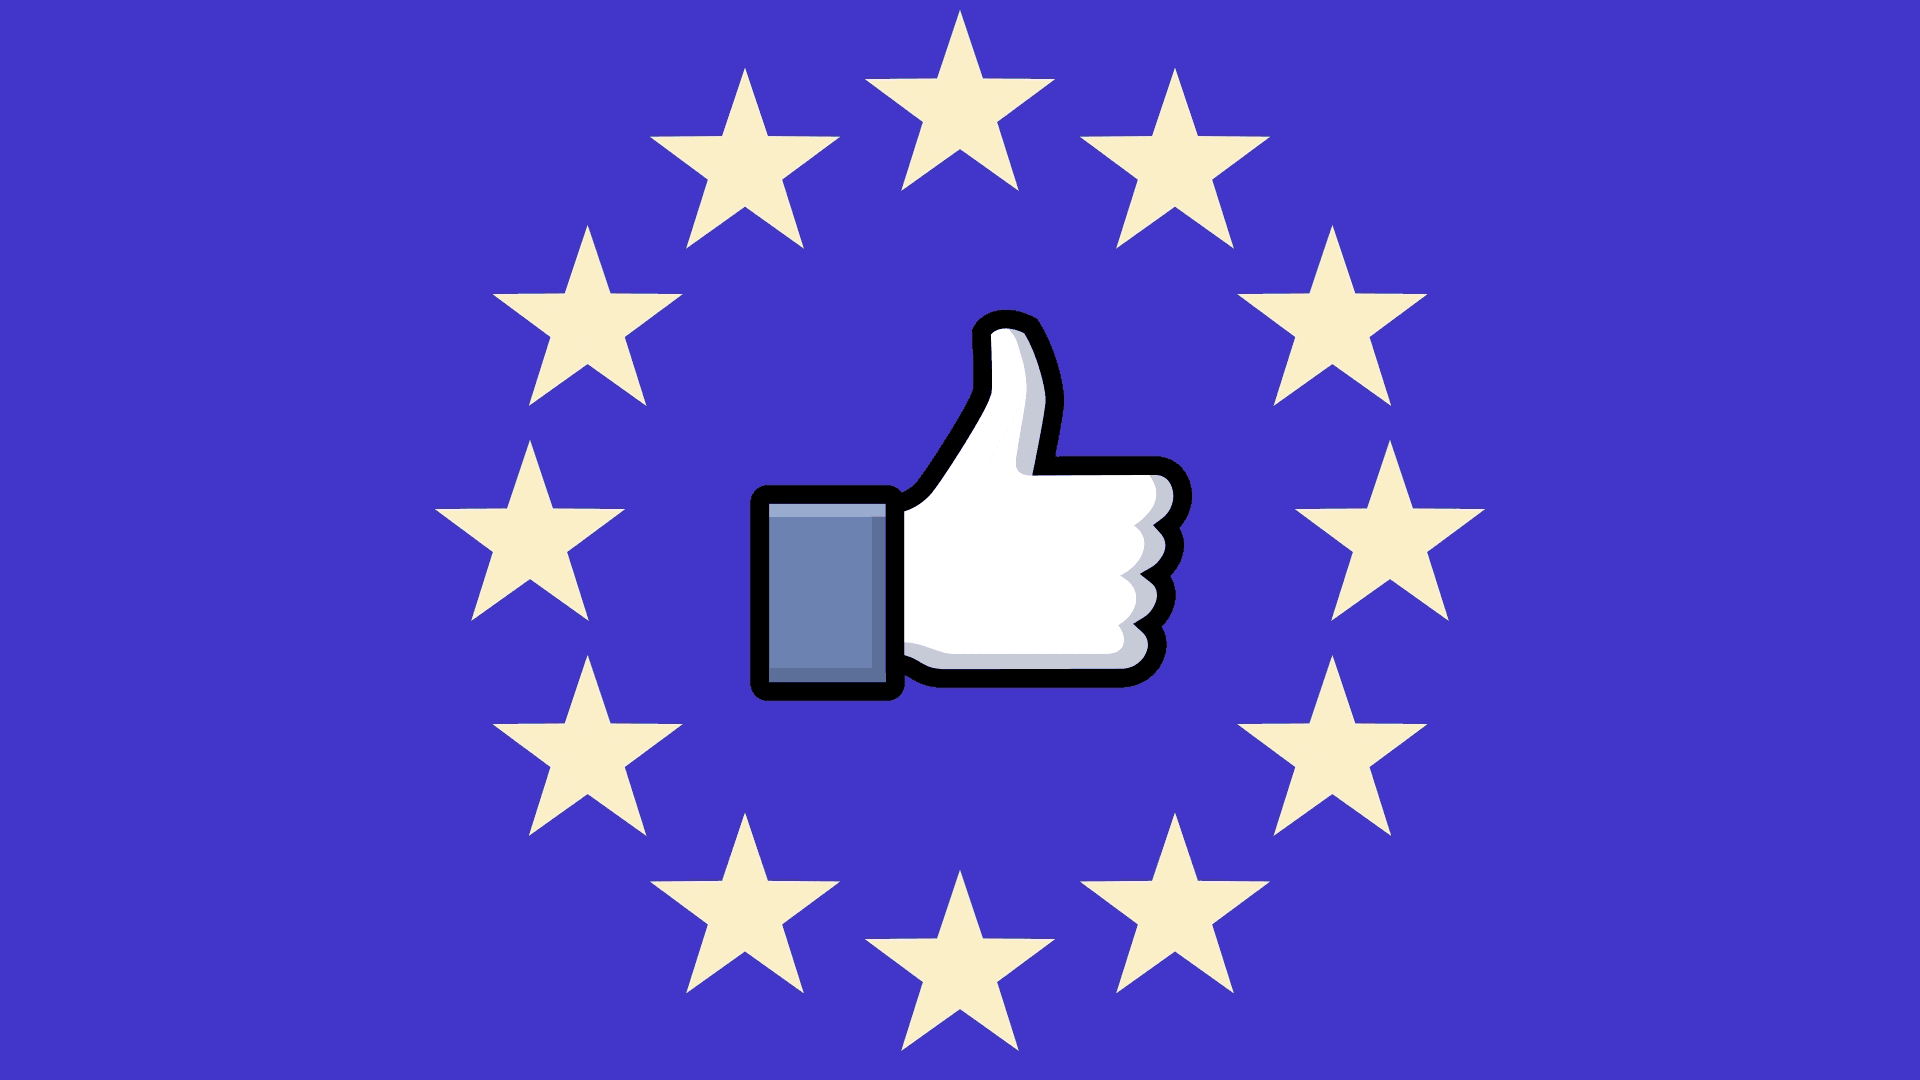 Axios animated gif of EU's circle of stars moving around Facebook's thumb rising up and down